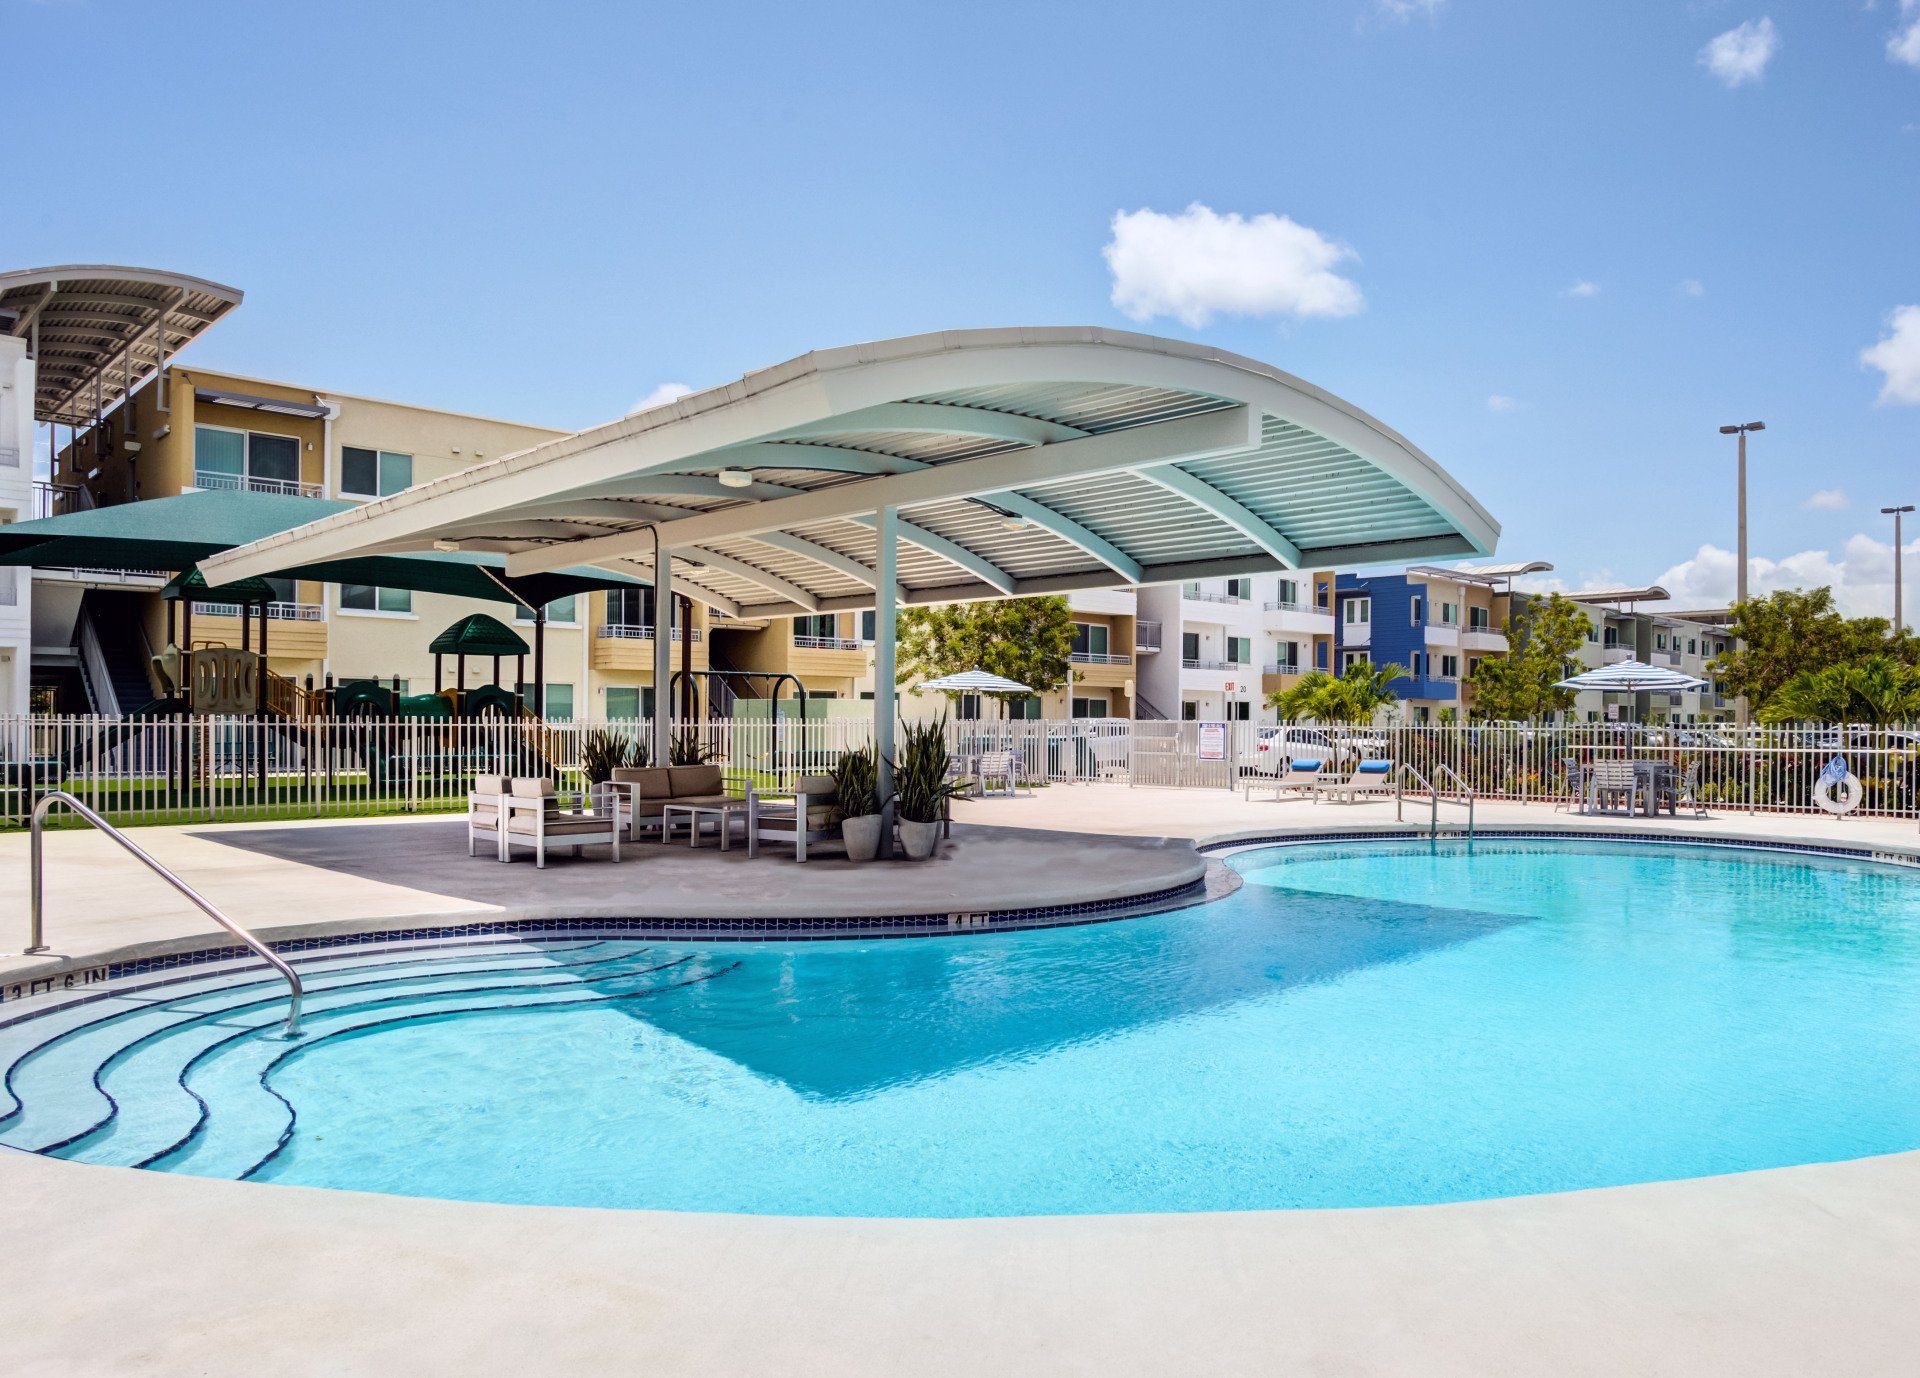 Swimming pool at Sophia Square Apartments in Homestead, FL.